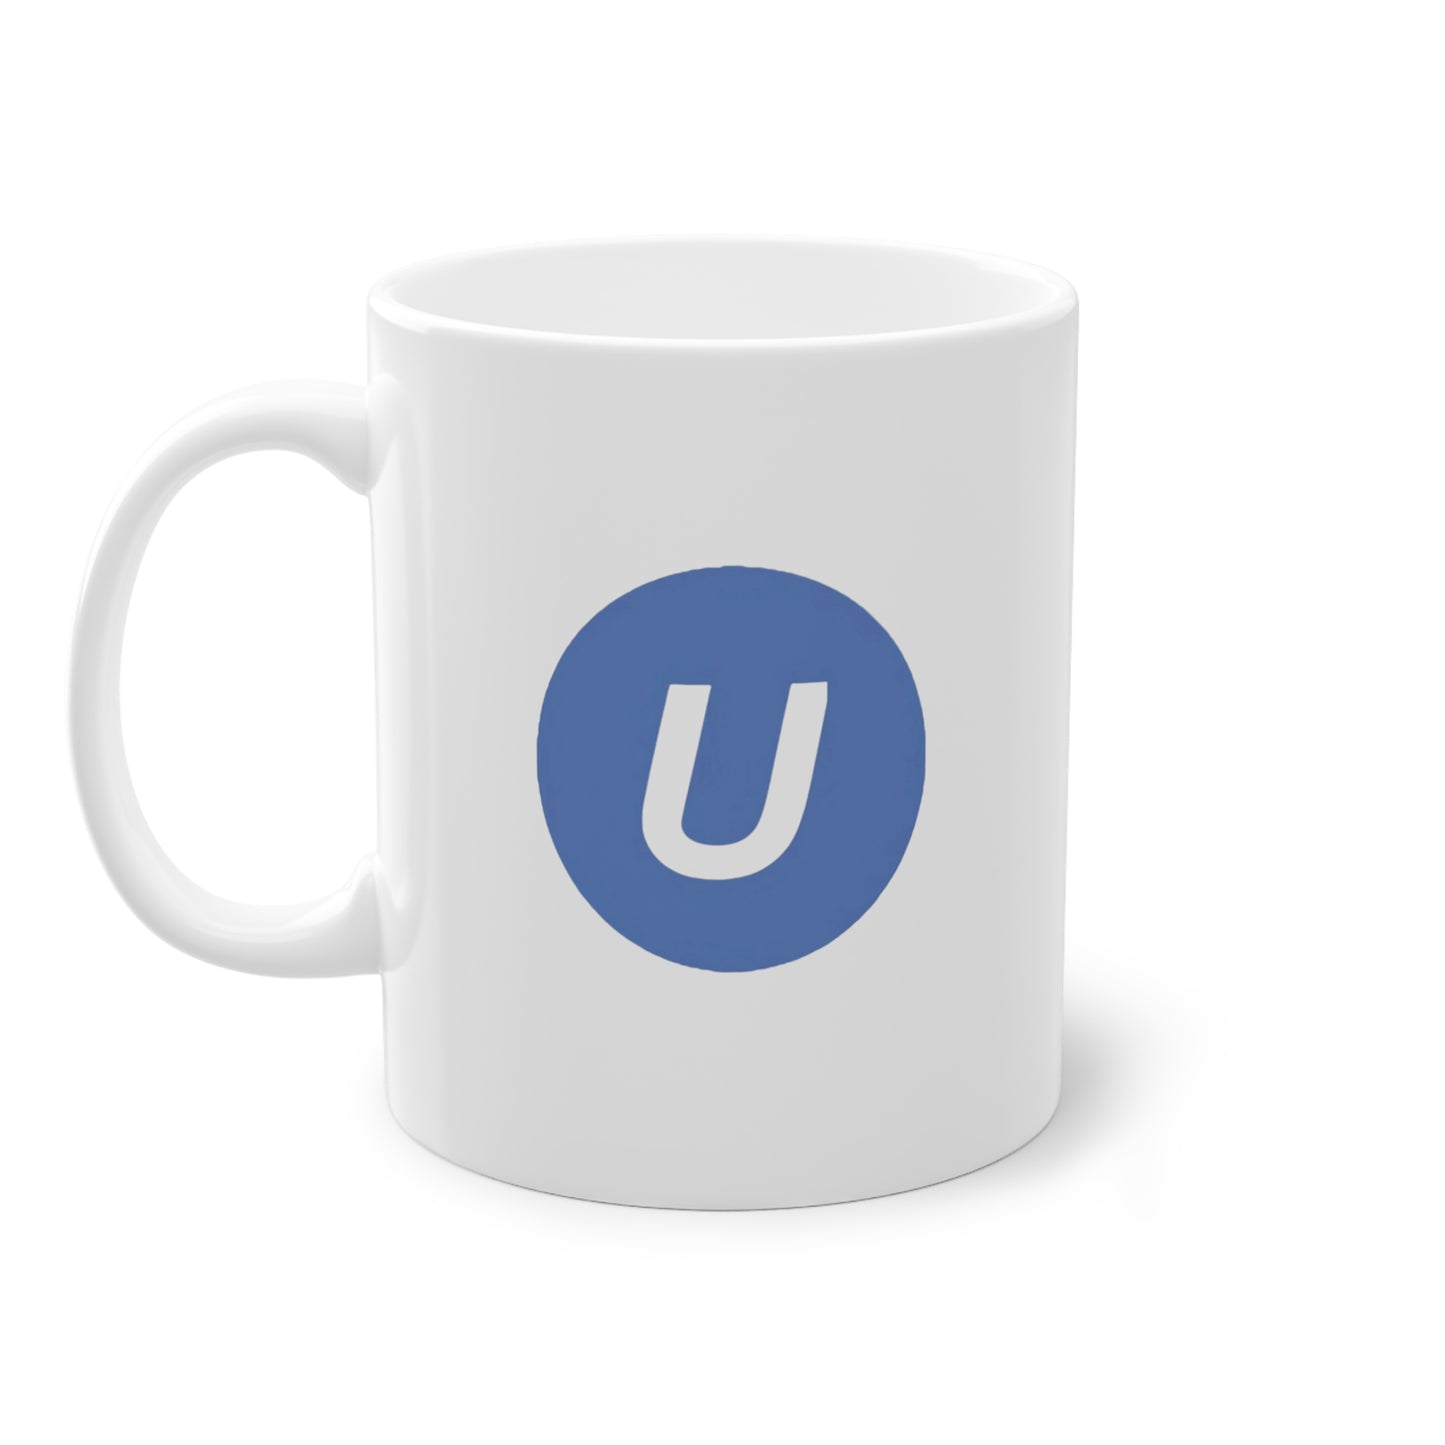 Mug - I ❤️ UnrealIRCd Ascii Cow Mug